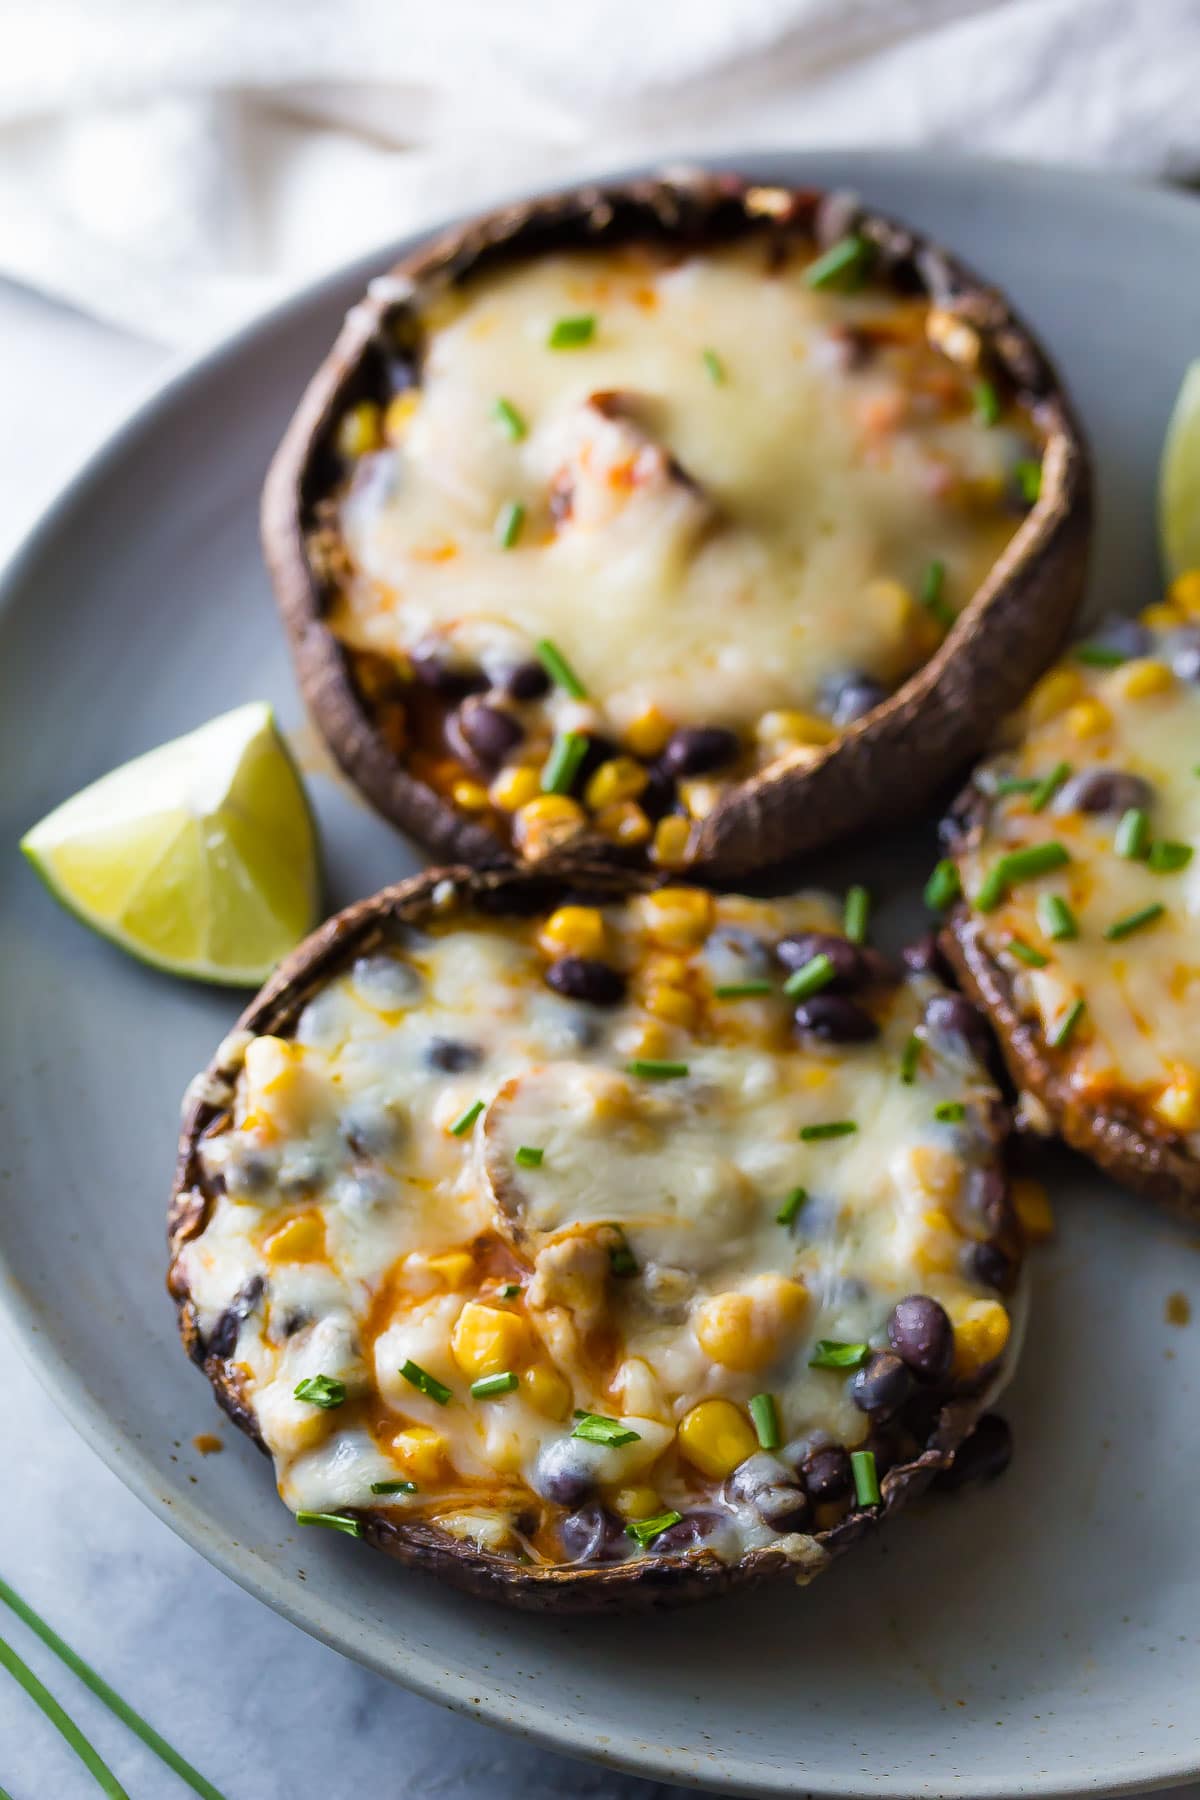 https://sweetpeasandsaffron.com/enchilada-stuffed-grilled-portobello-mushrooms/